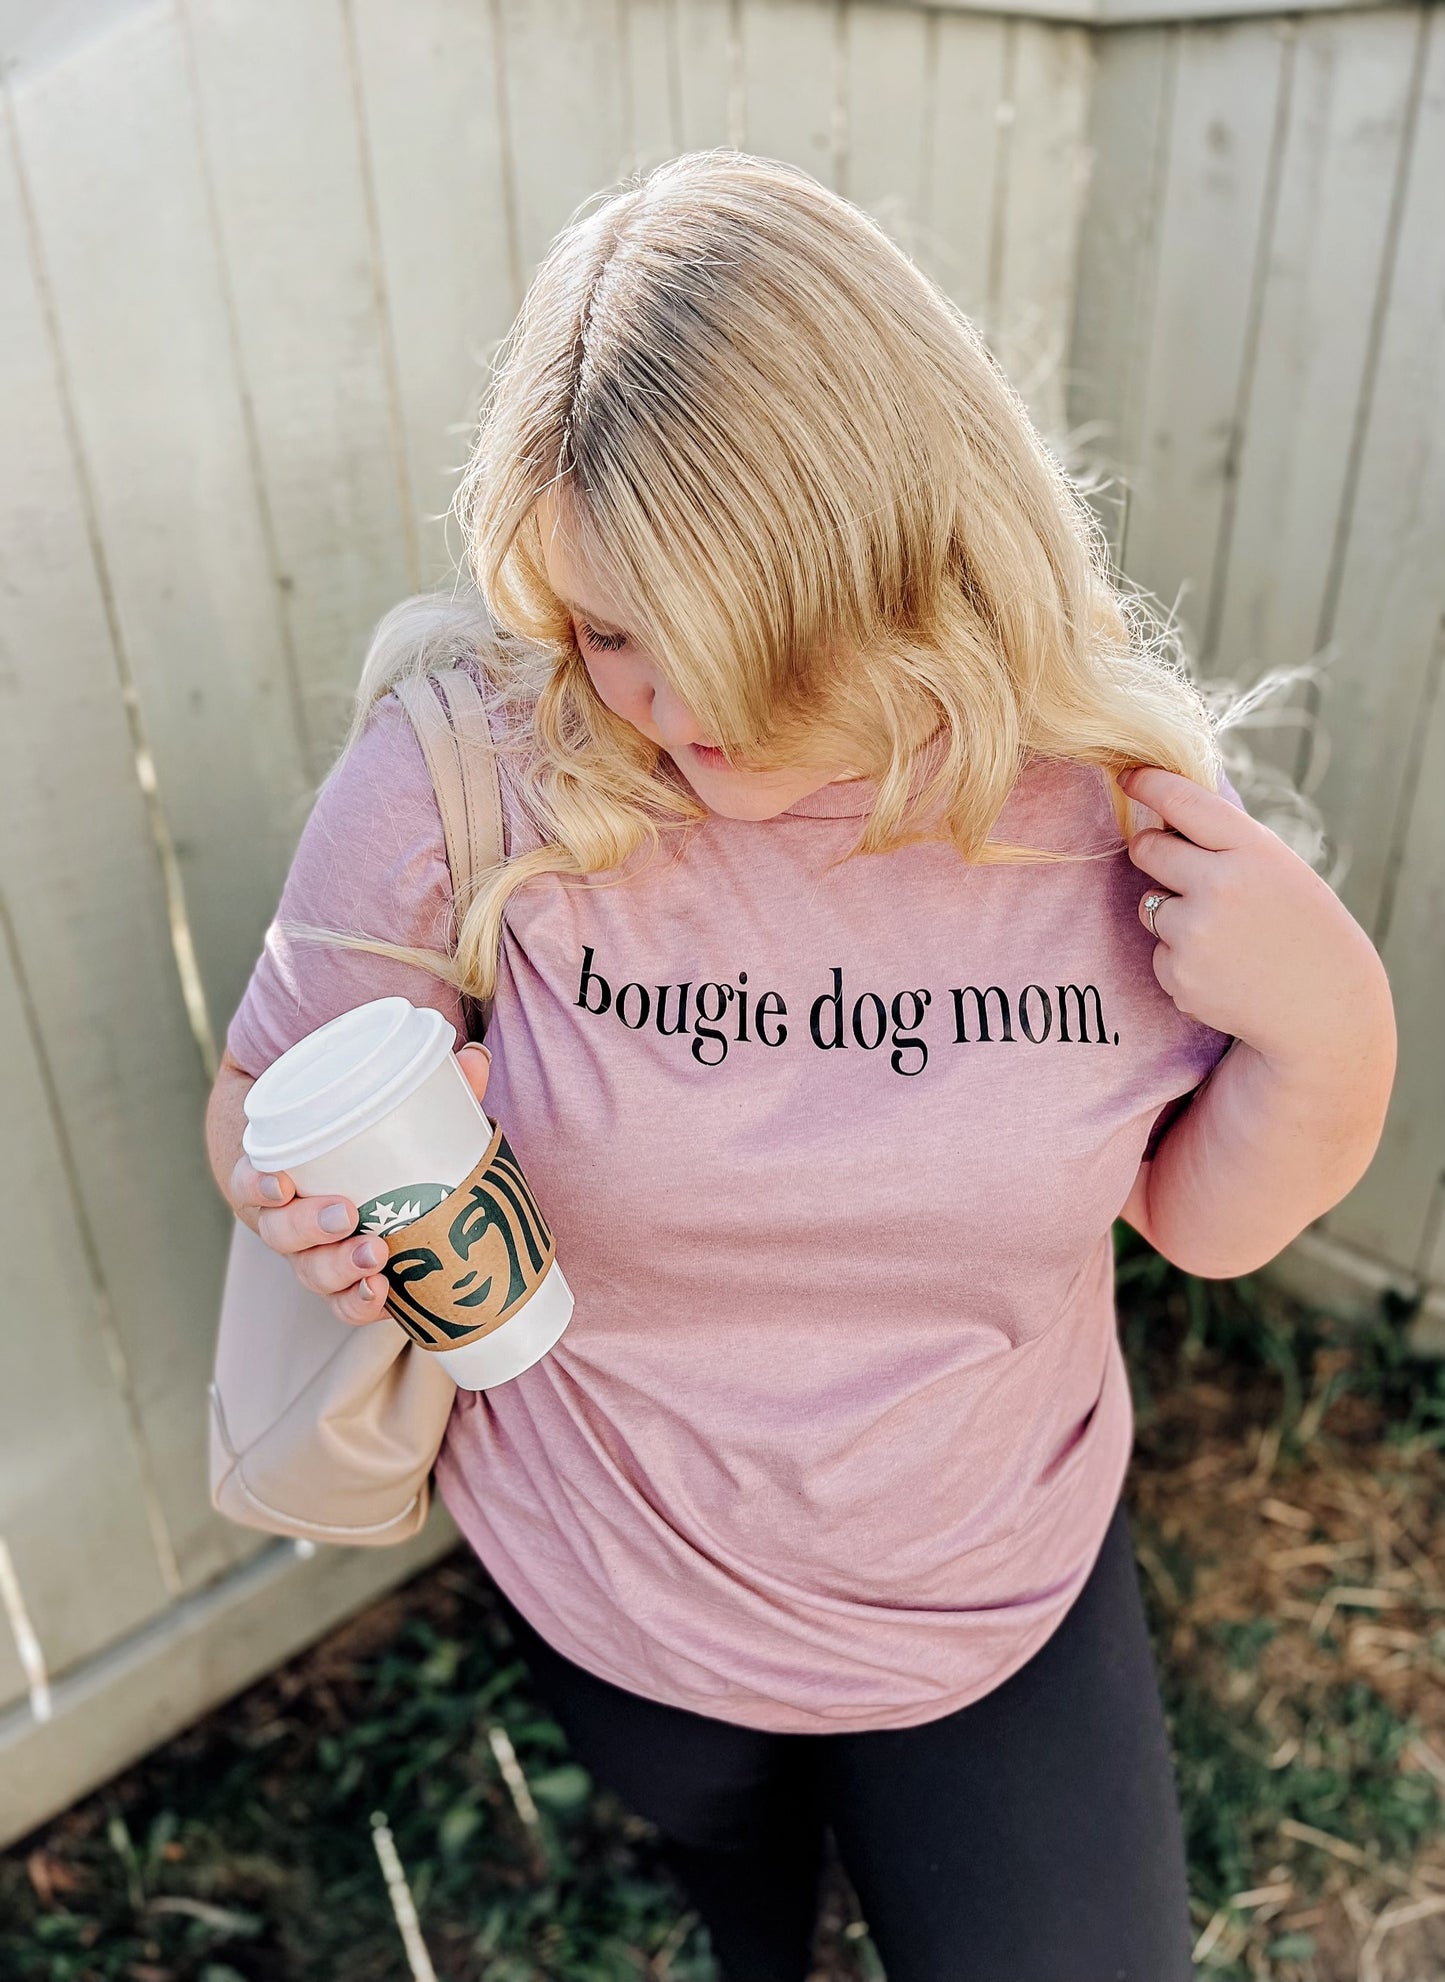 "Bougie Dog Mom" Tshirt